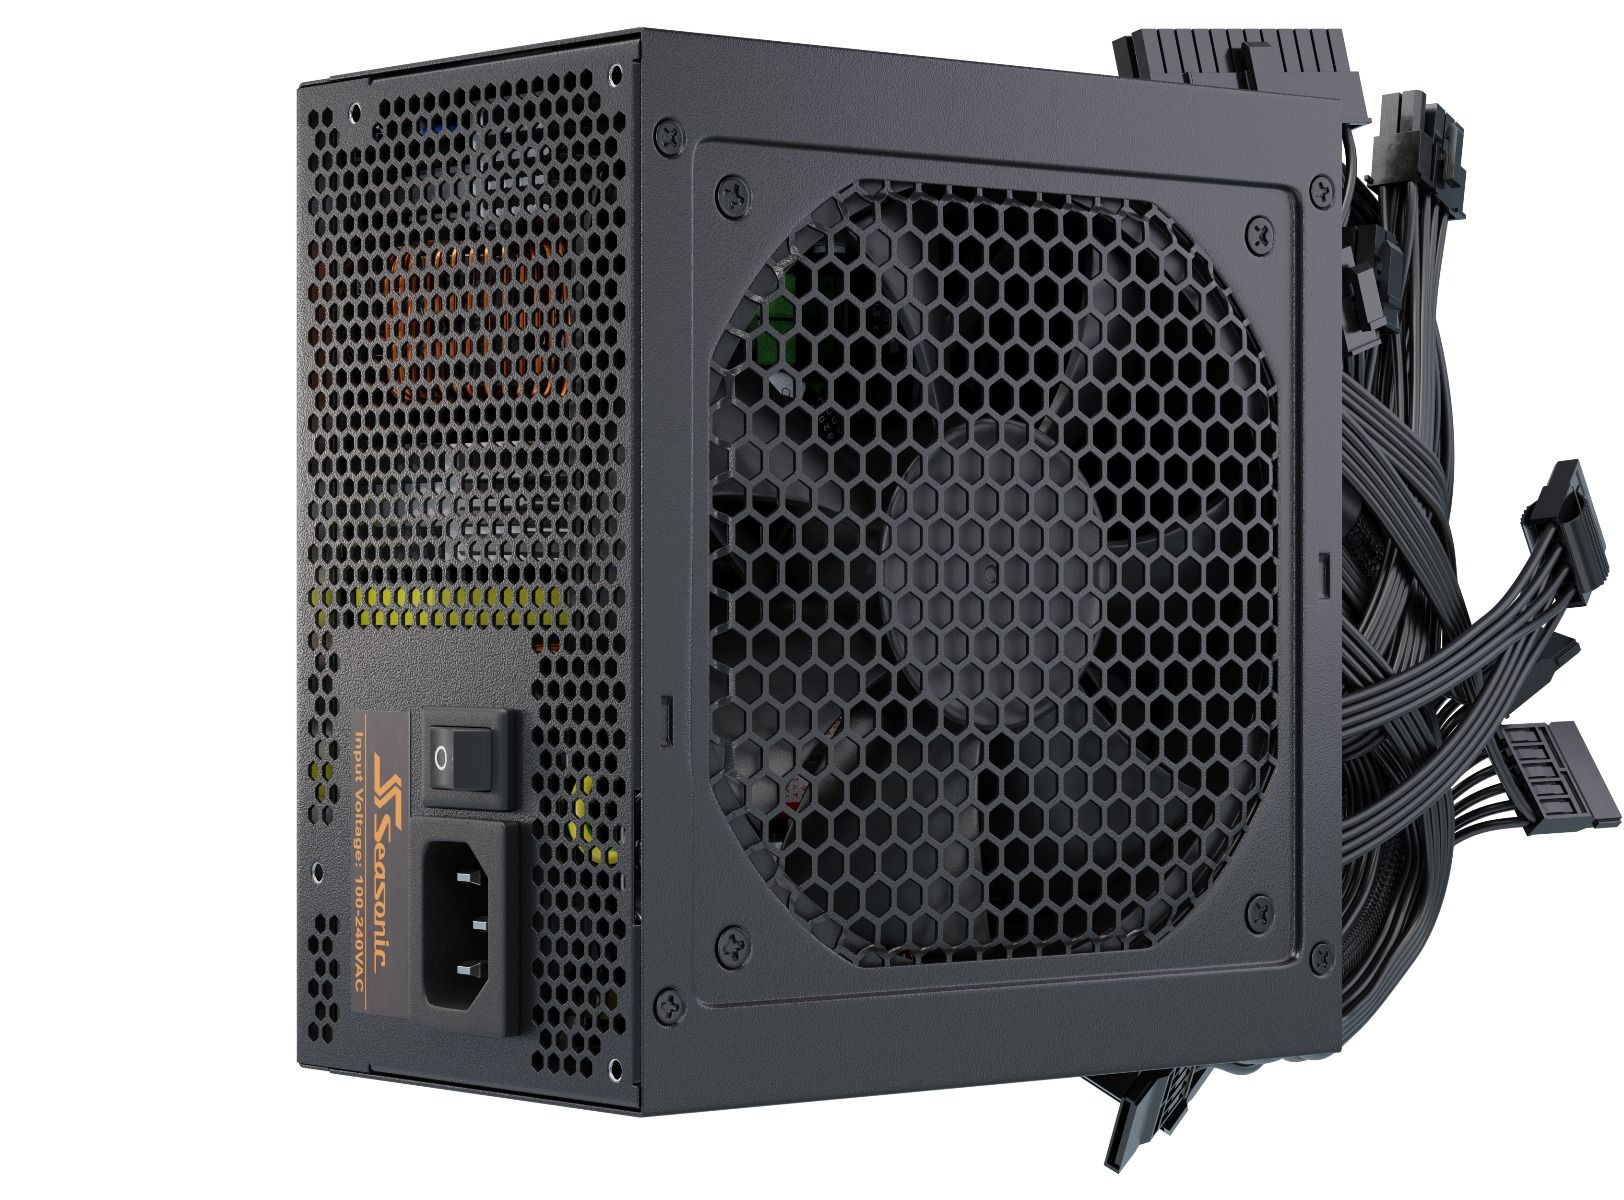 Seasonic B12 BC-850 850W ATX - PC-/Server Netzteil - ATX